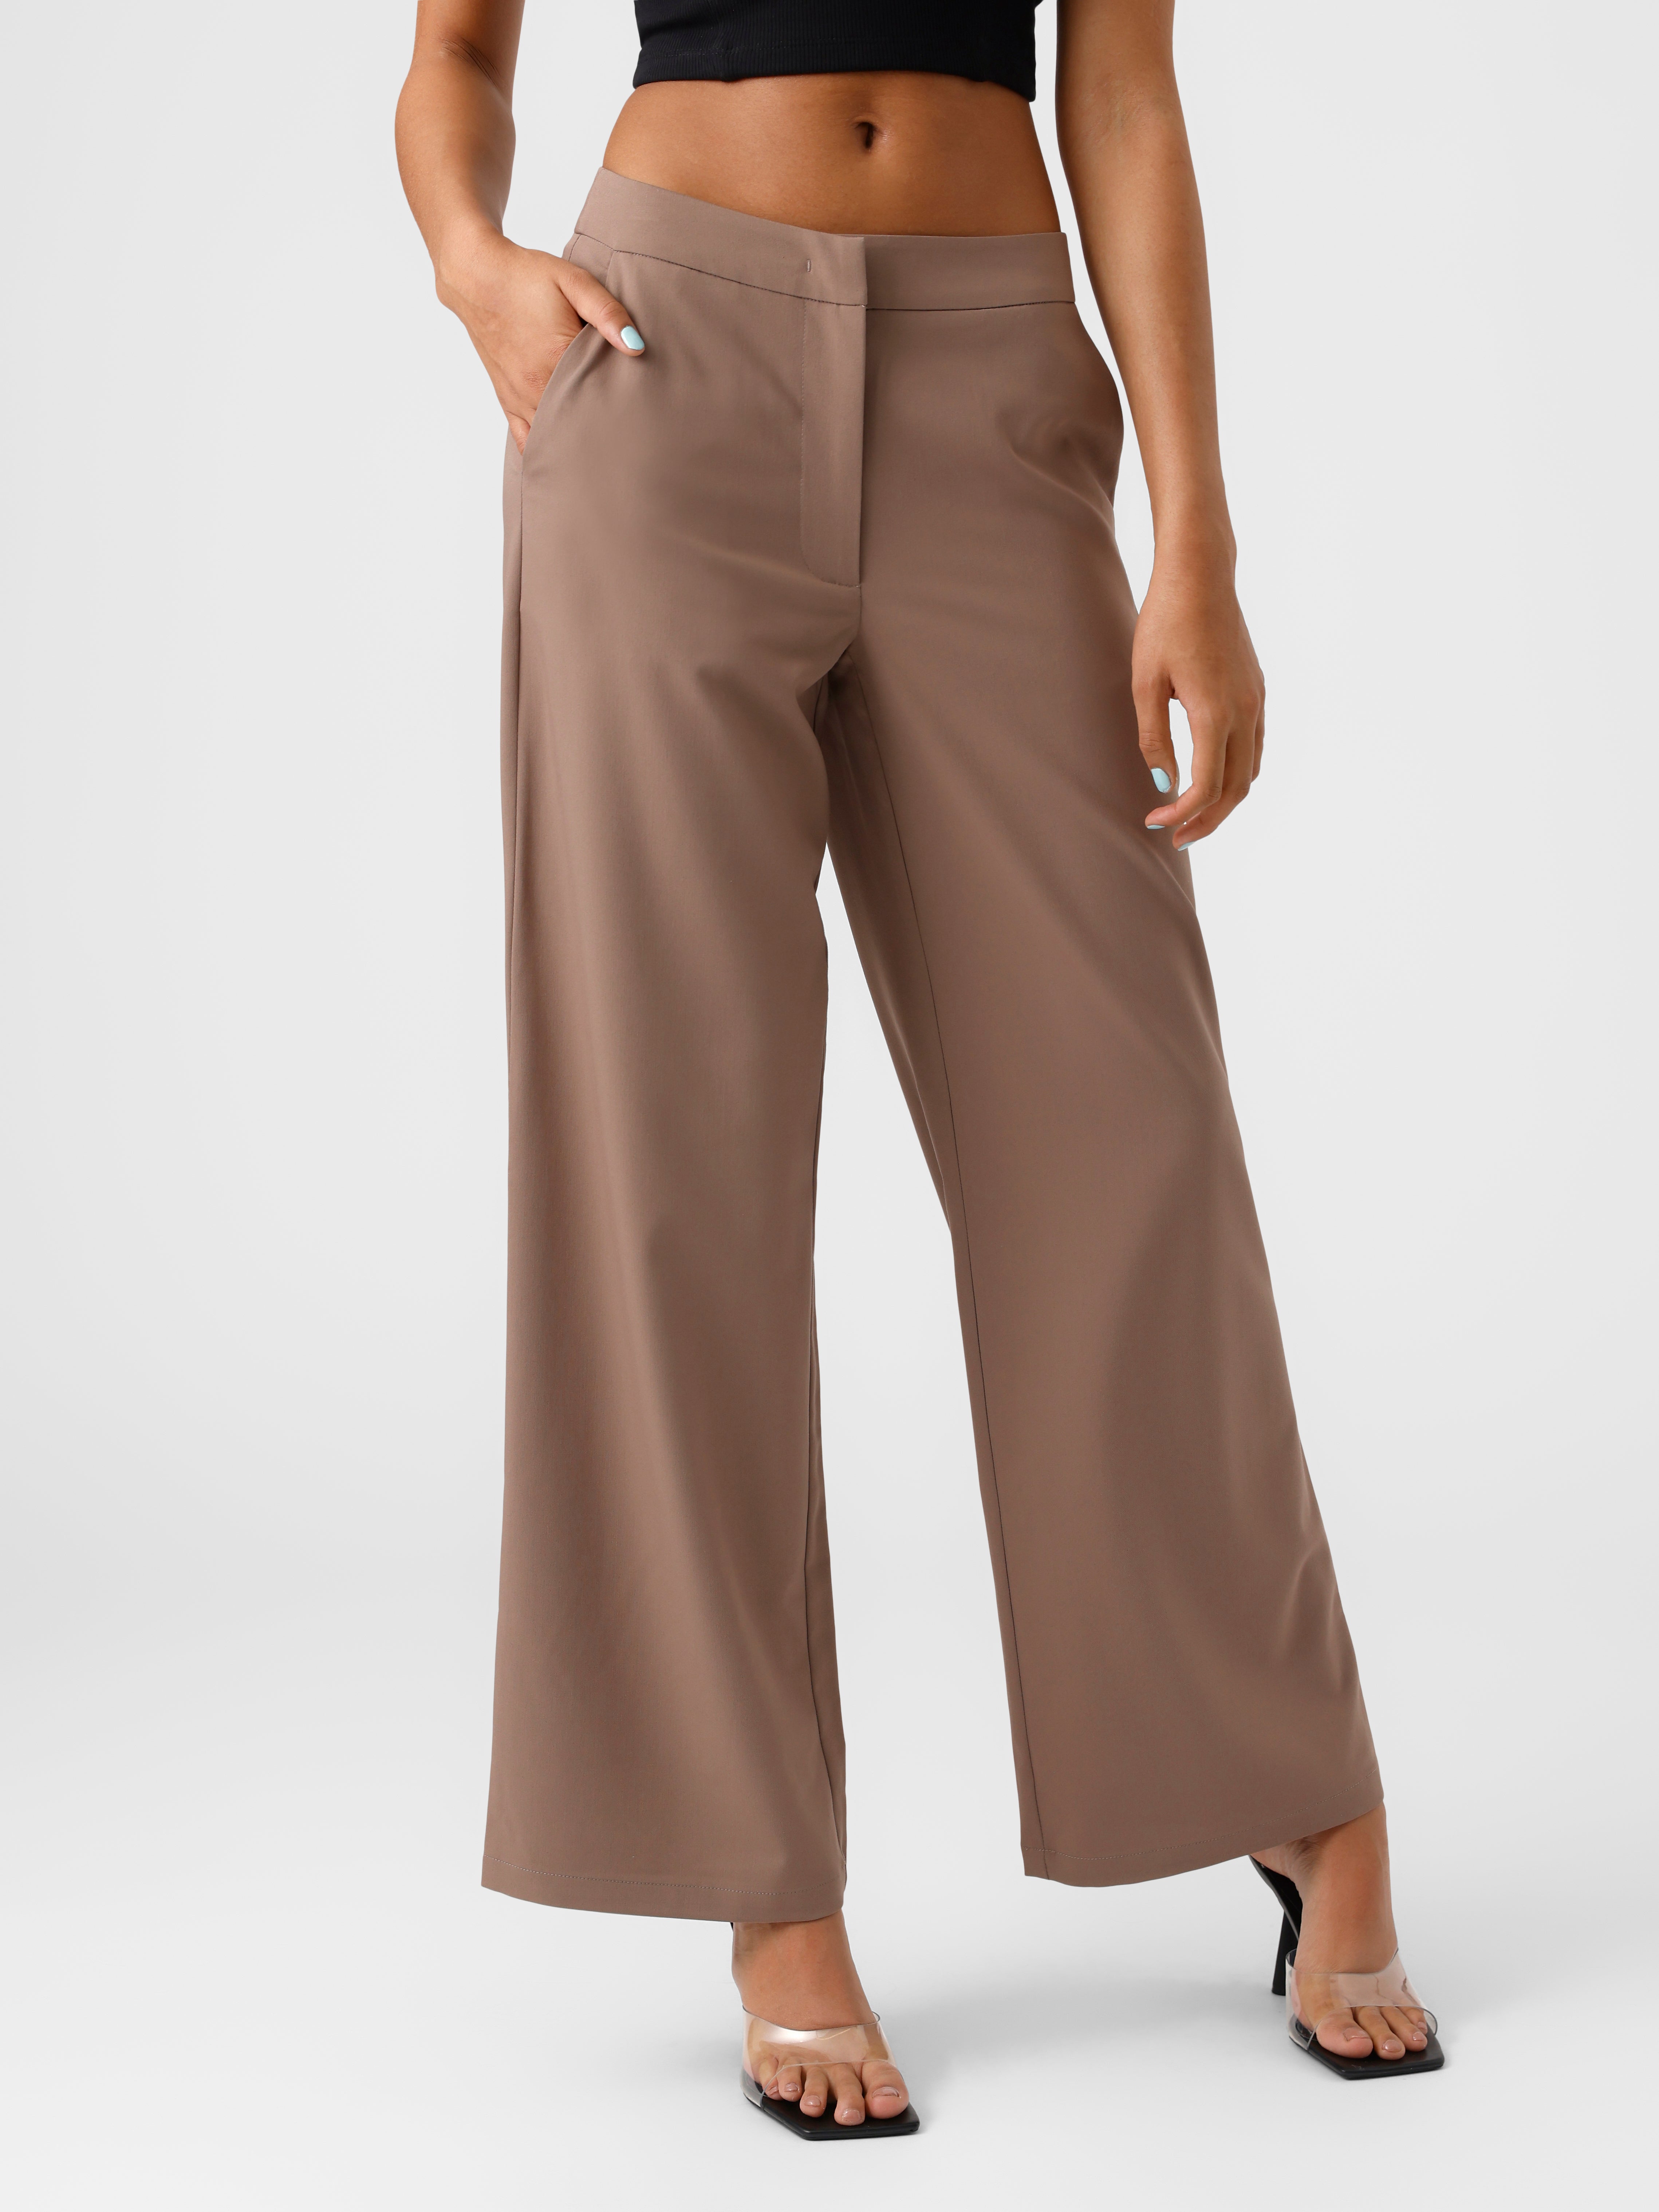 Buy Pants  Trousers For Women Online  Vero Moda